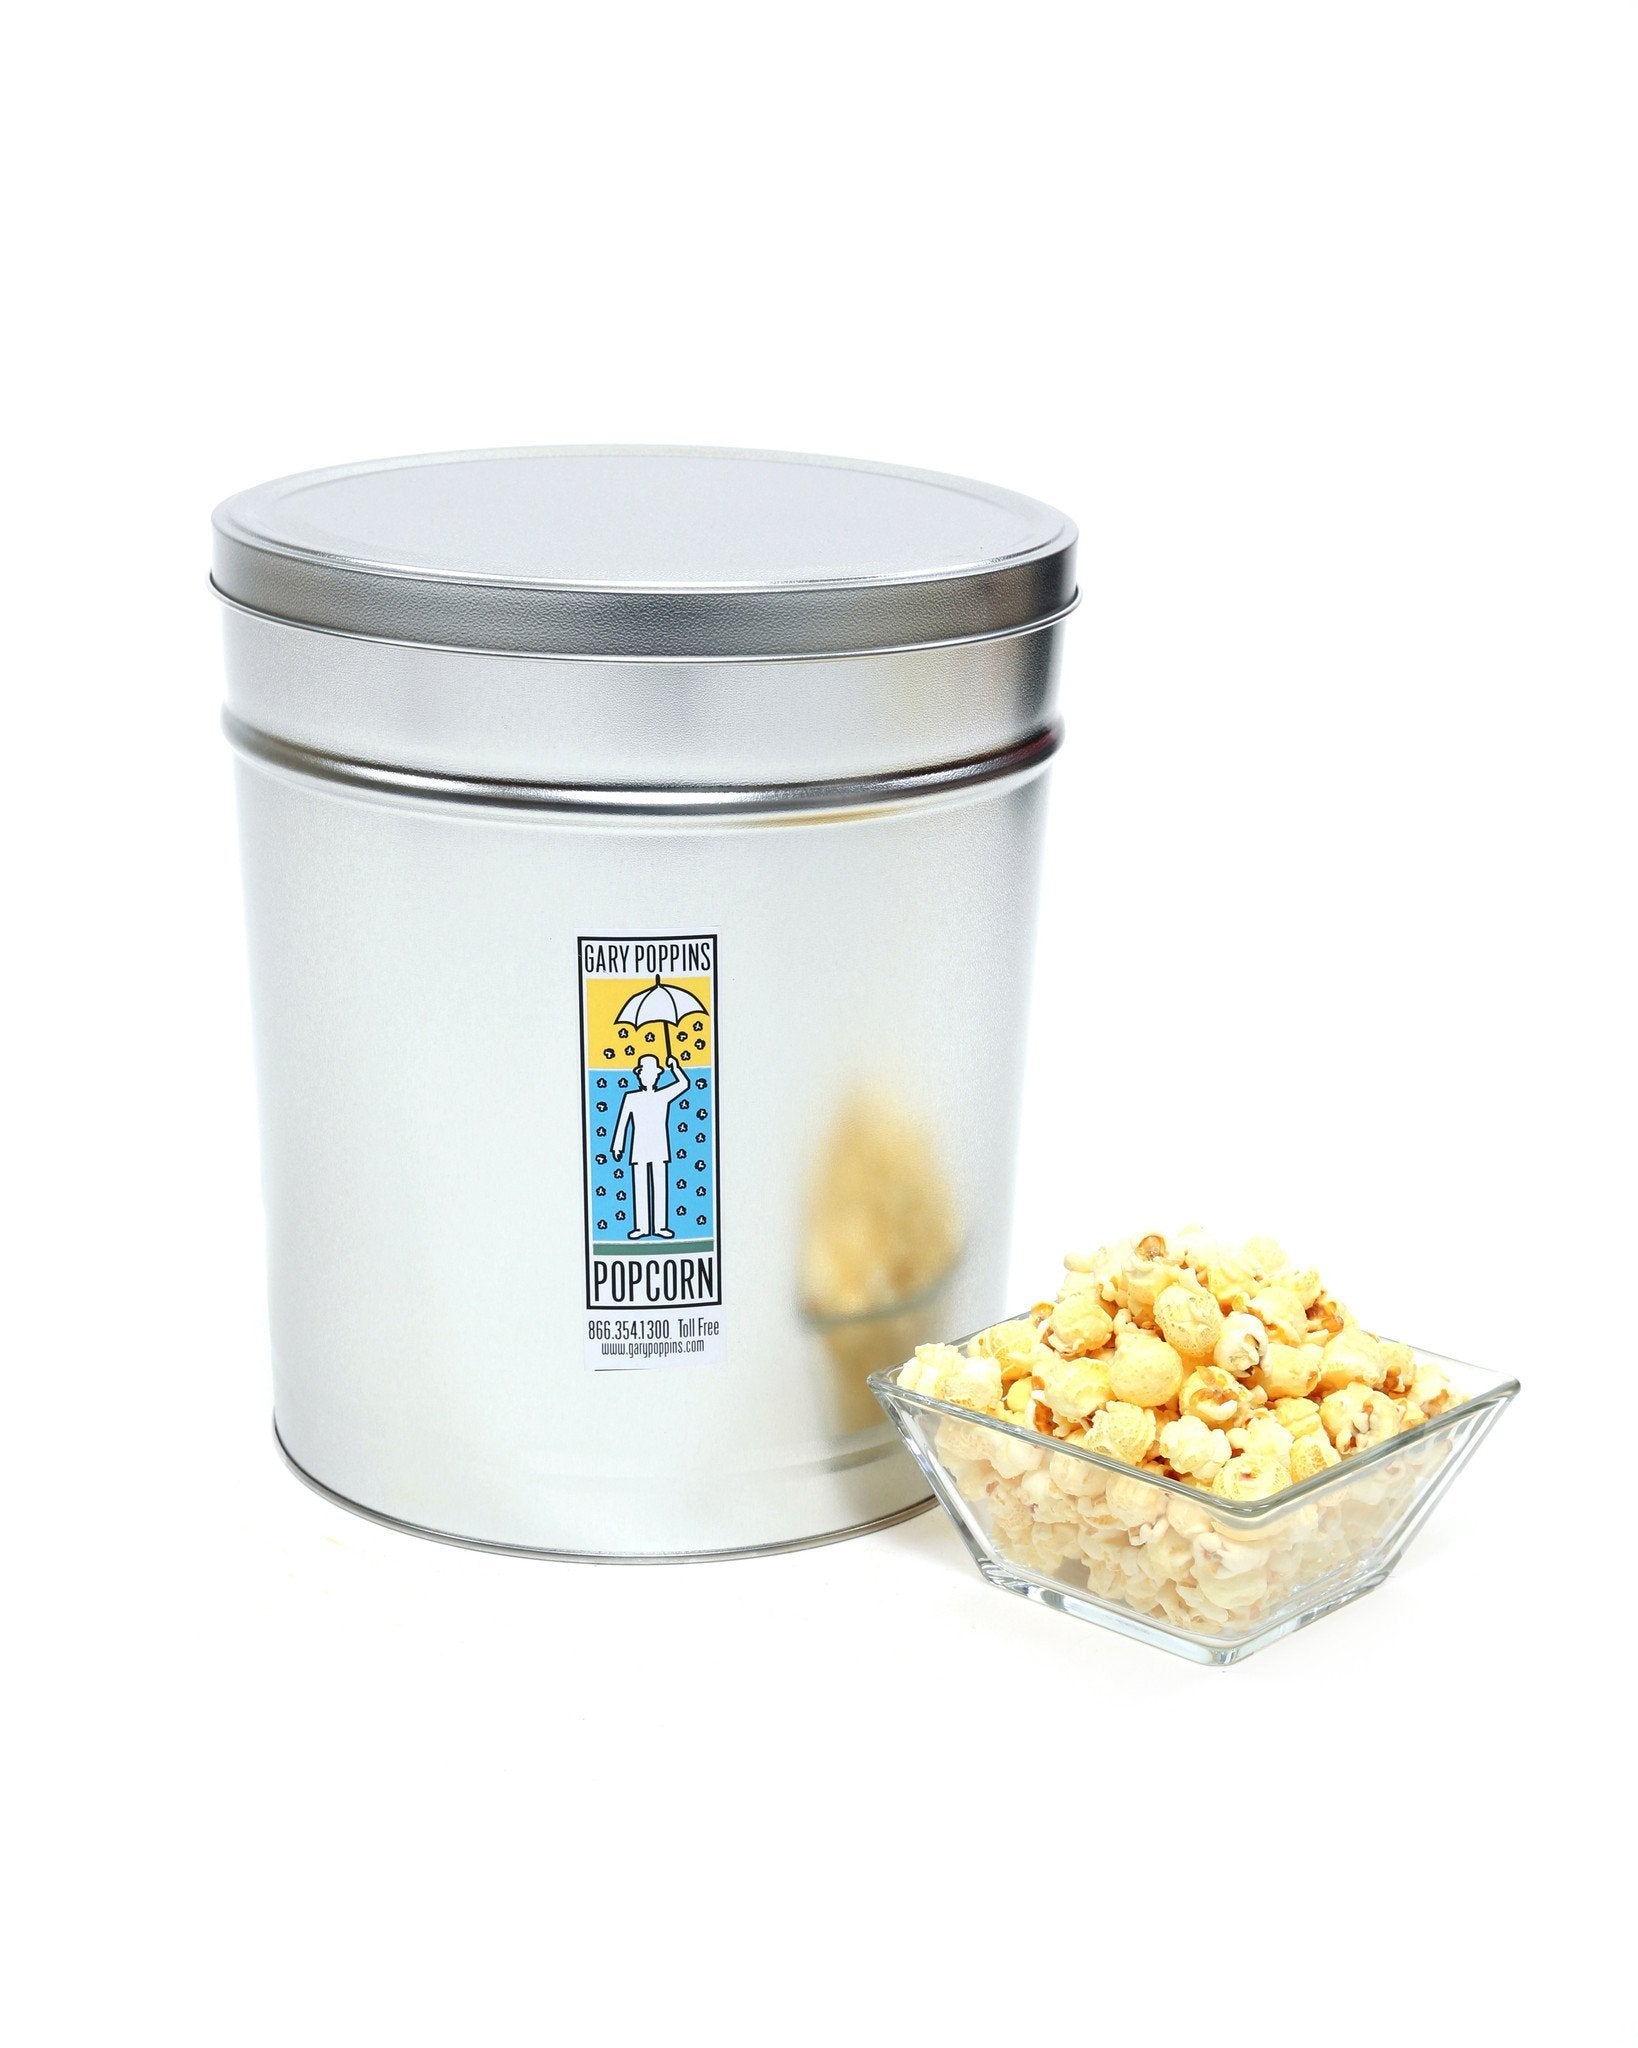 Aged White Cheddar - Gourmet Popcorn - 3.5 Gallon Tin